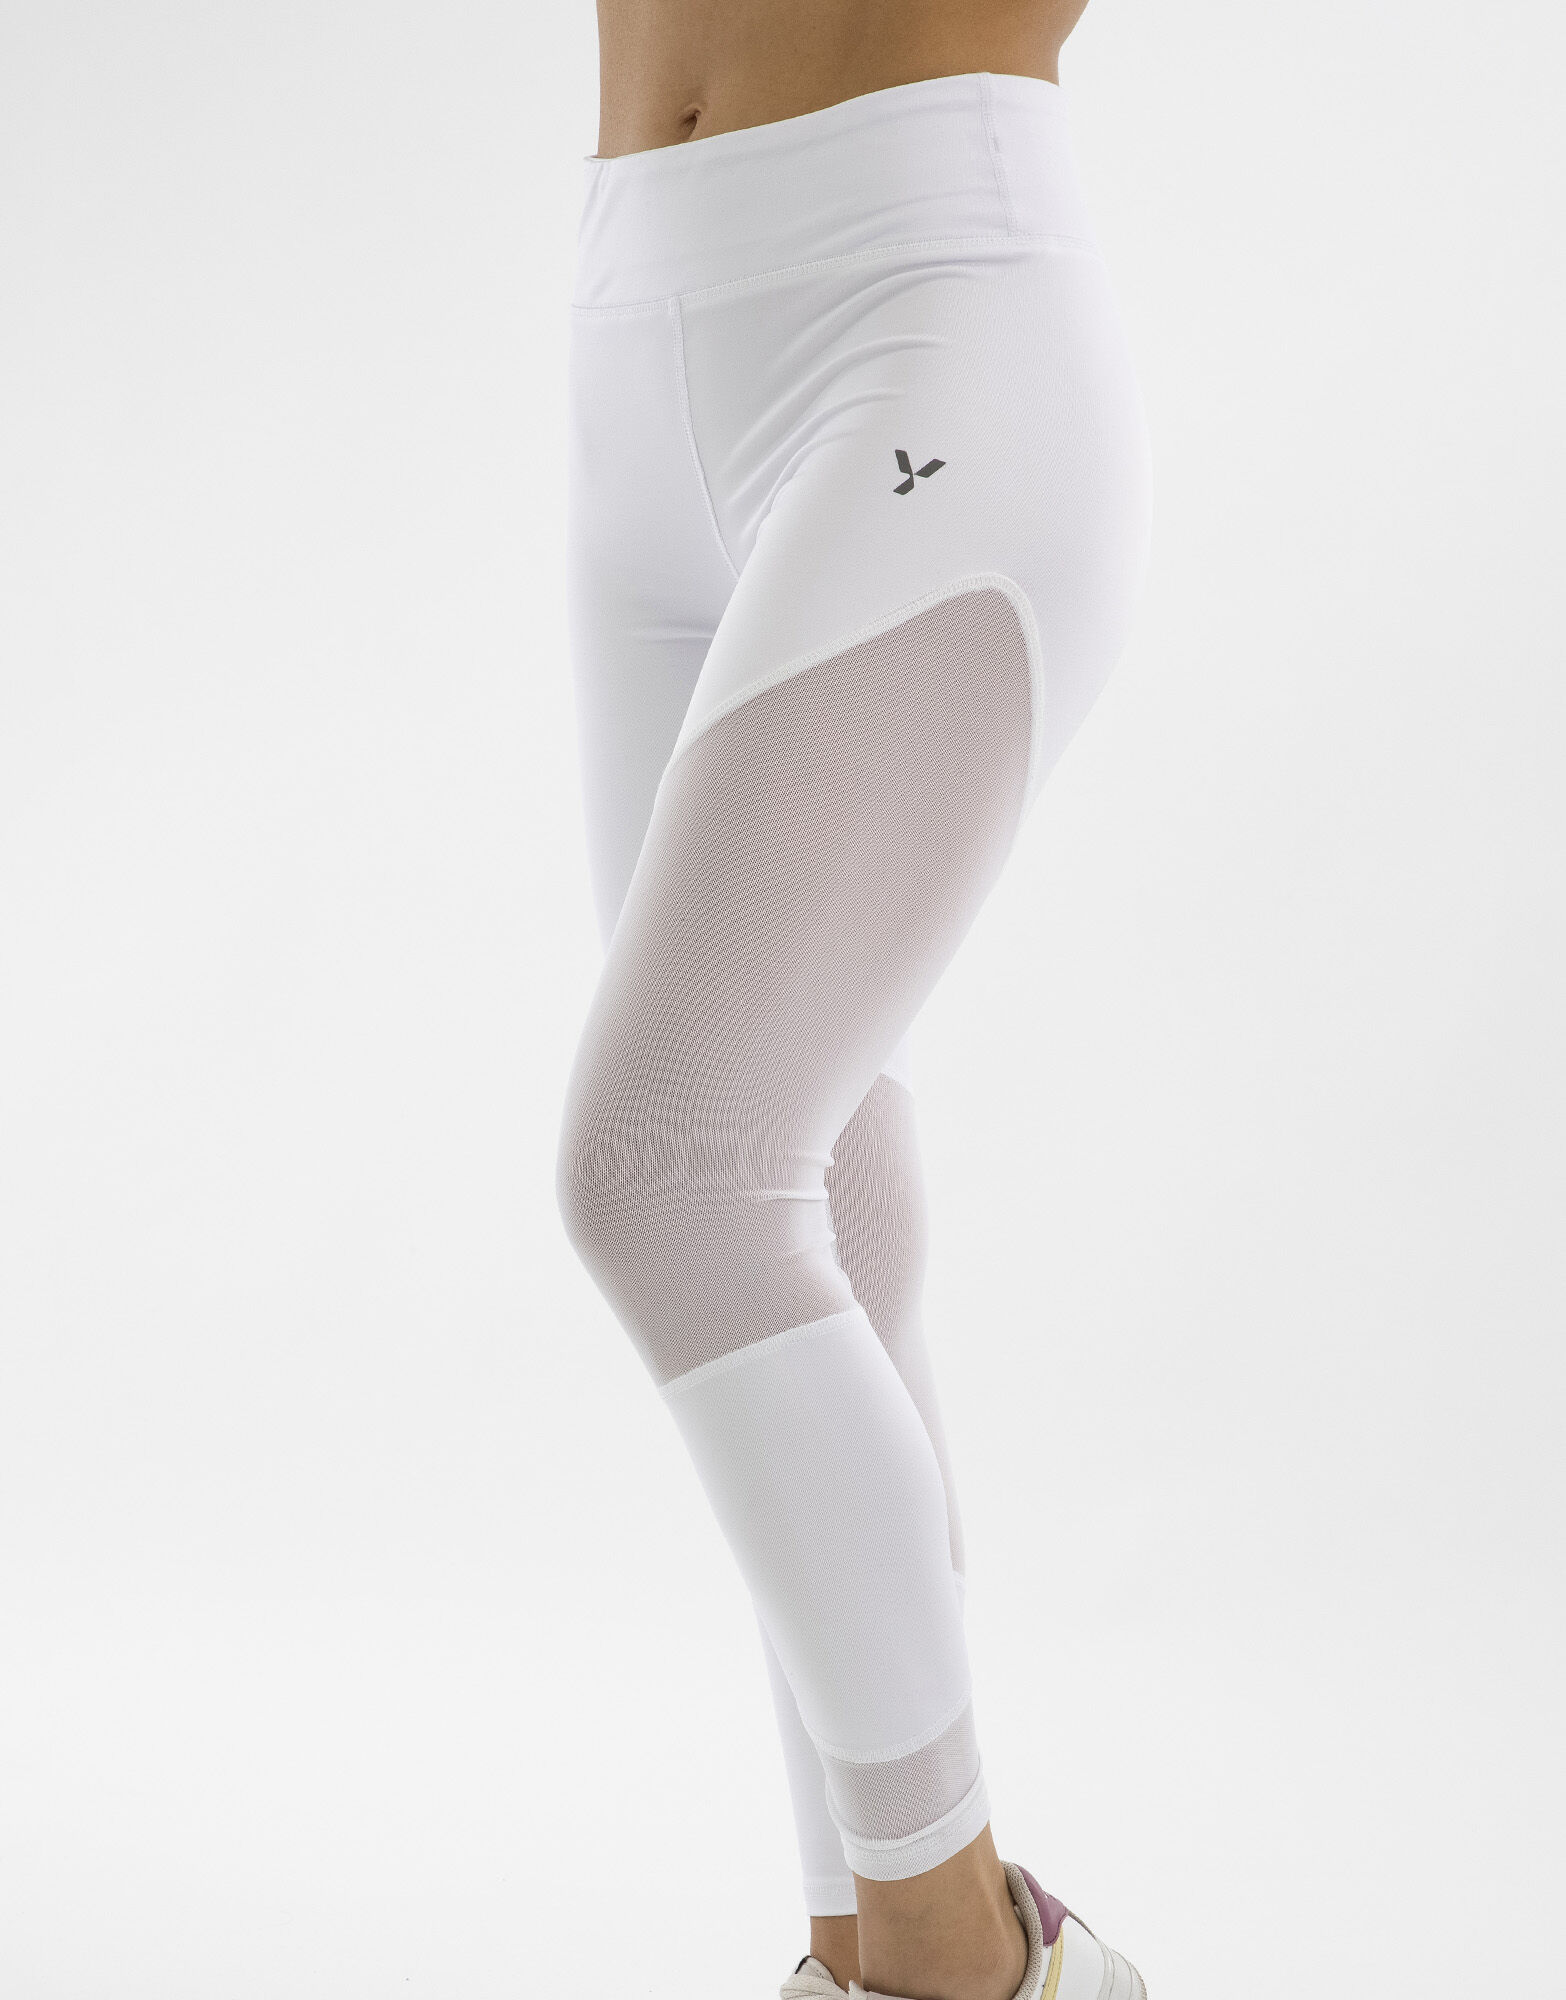 YAMAMOTO OUTFIT Sport Legging Colore: Bianco/bianco L